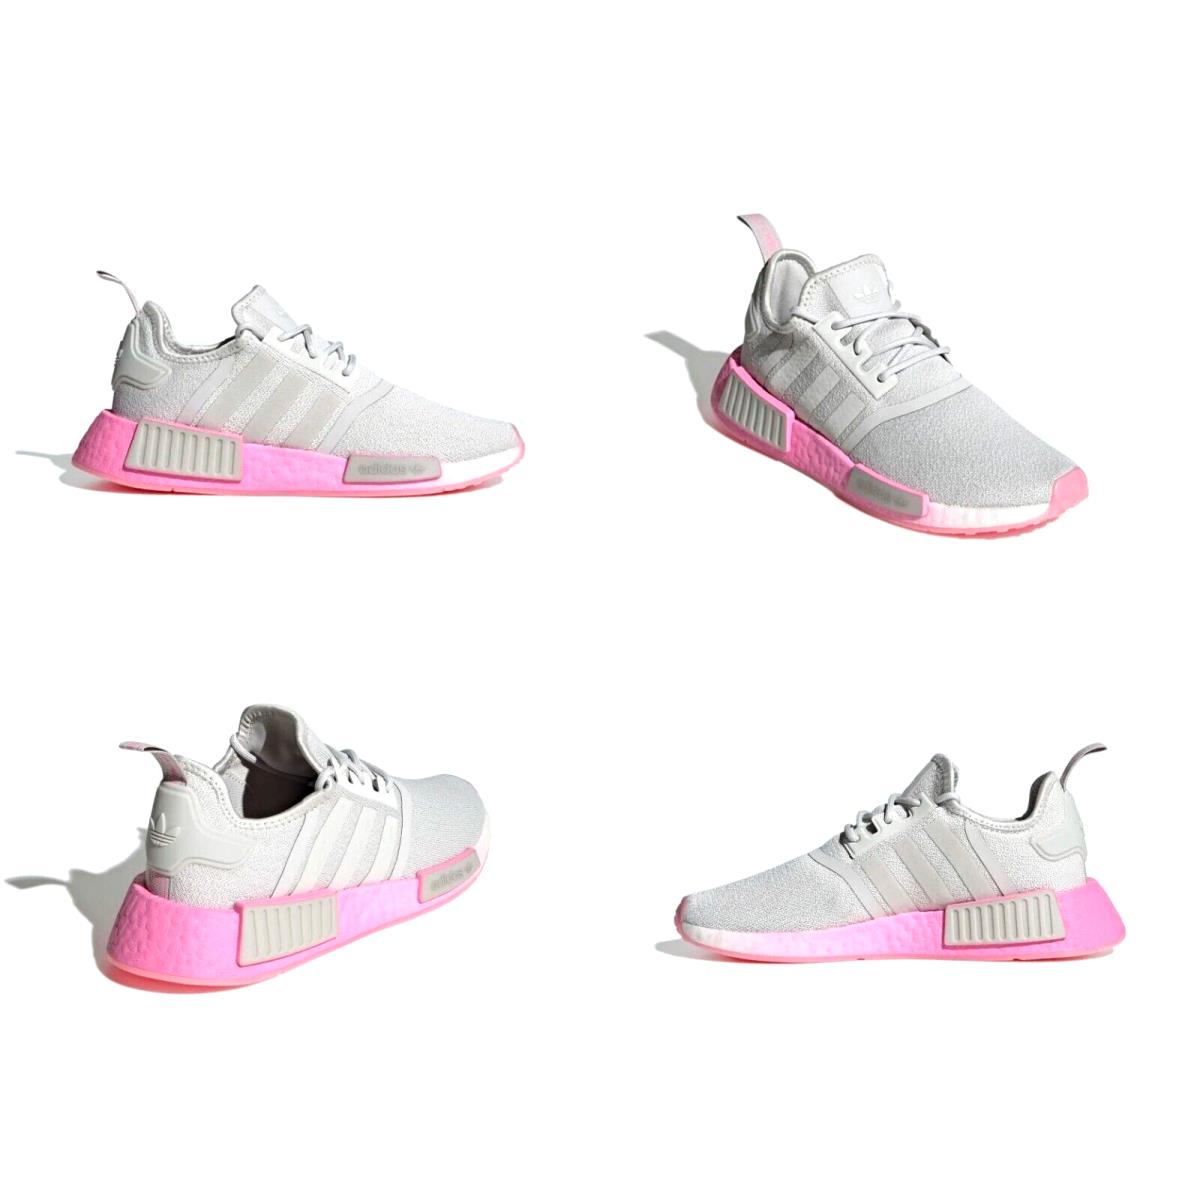 Adidas Nmd R1 W Boost Grey /pink / White Womens Size 6.5 US GW9462